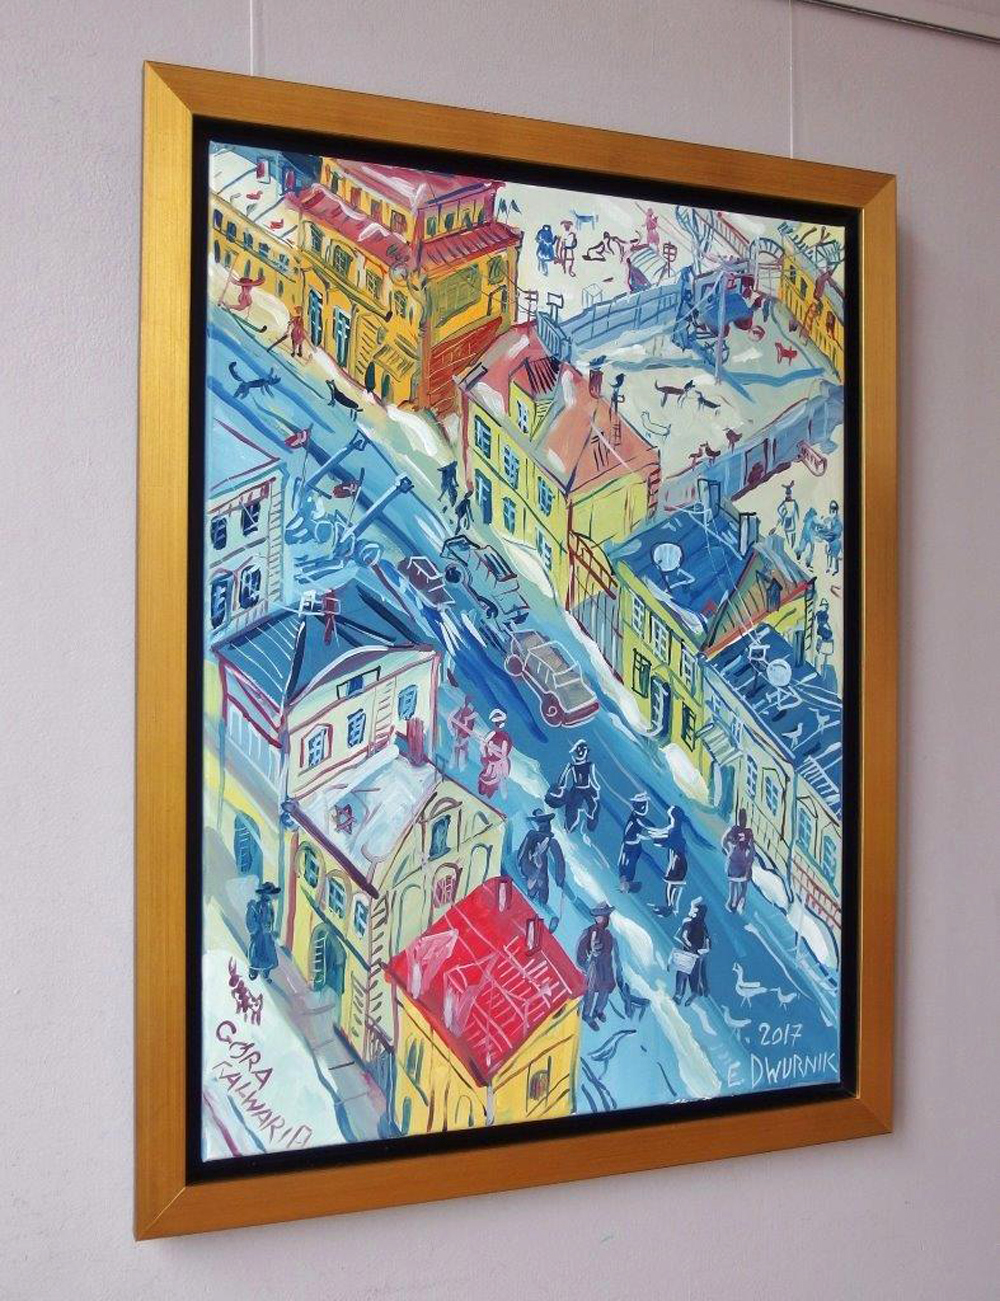 Edward Dwurnik - Góra Kalwaria (Oil on Canvas | Size: 87 x 114 cm | Price: 16000 PLN)